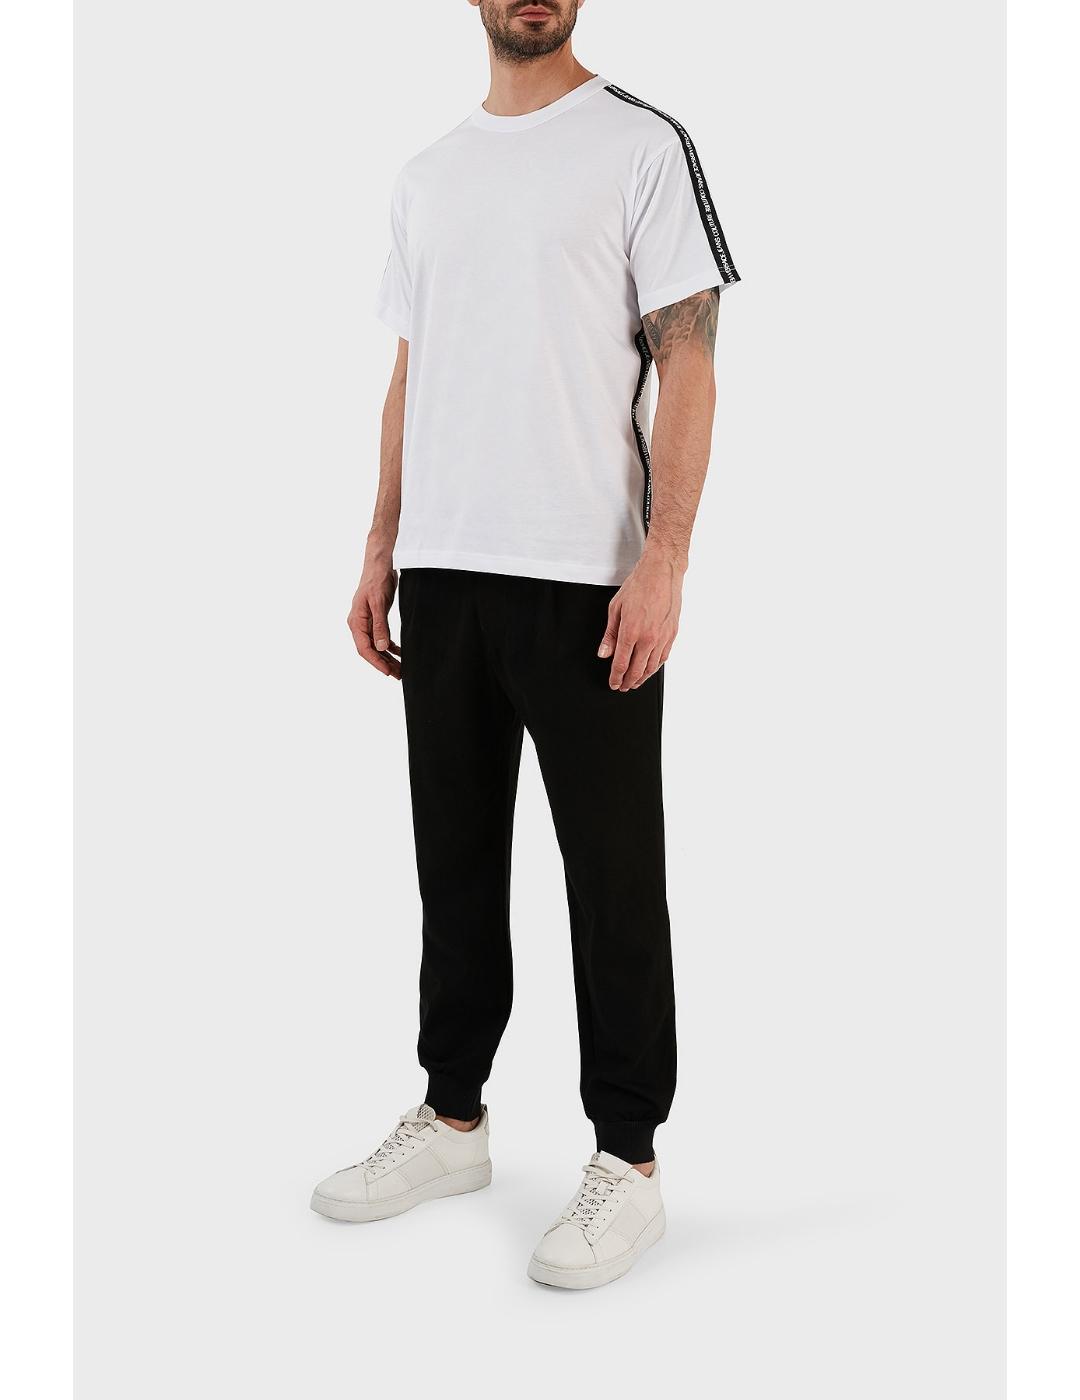 Camiseta Versace Jeans blanca logo tira para hombre